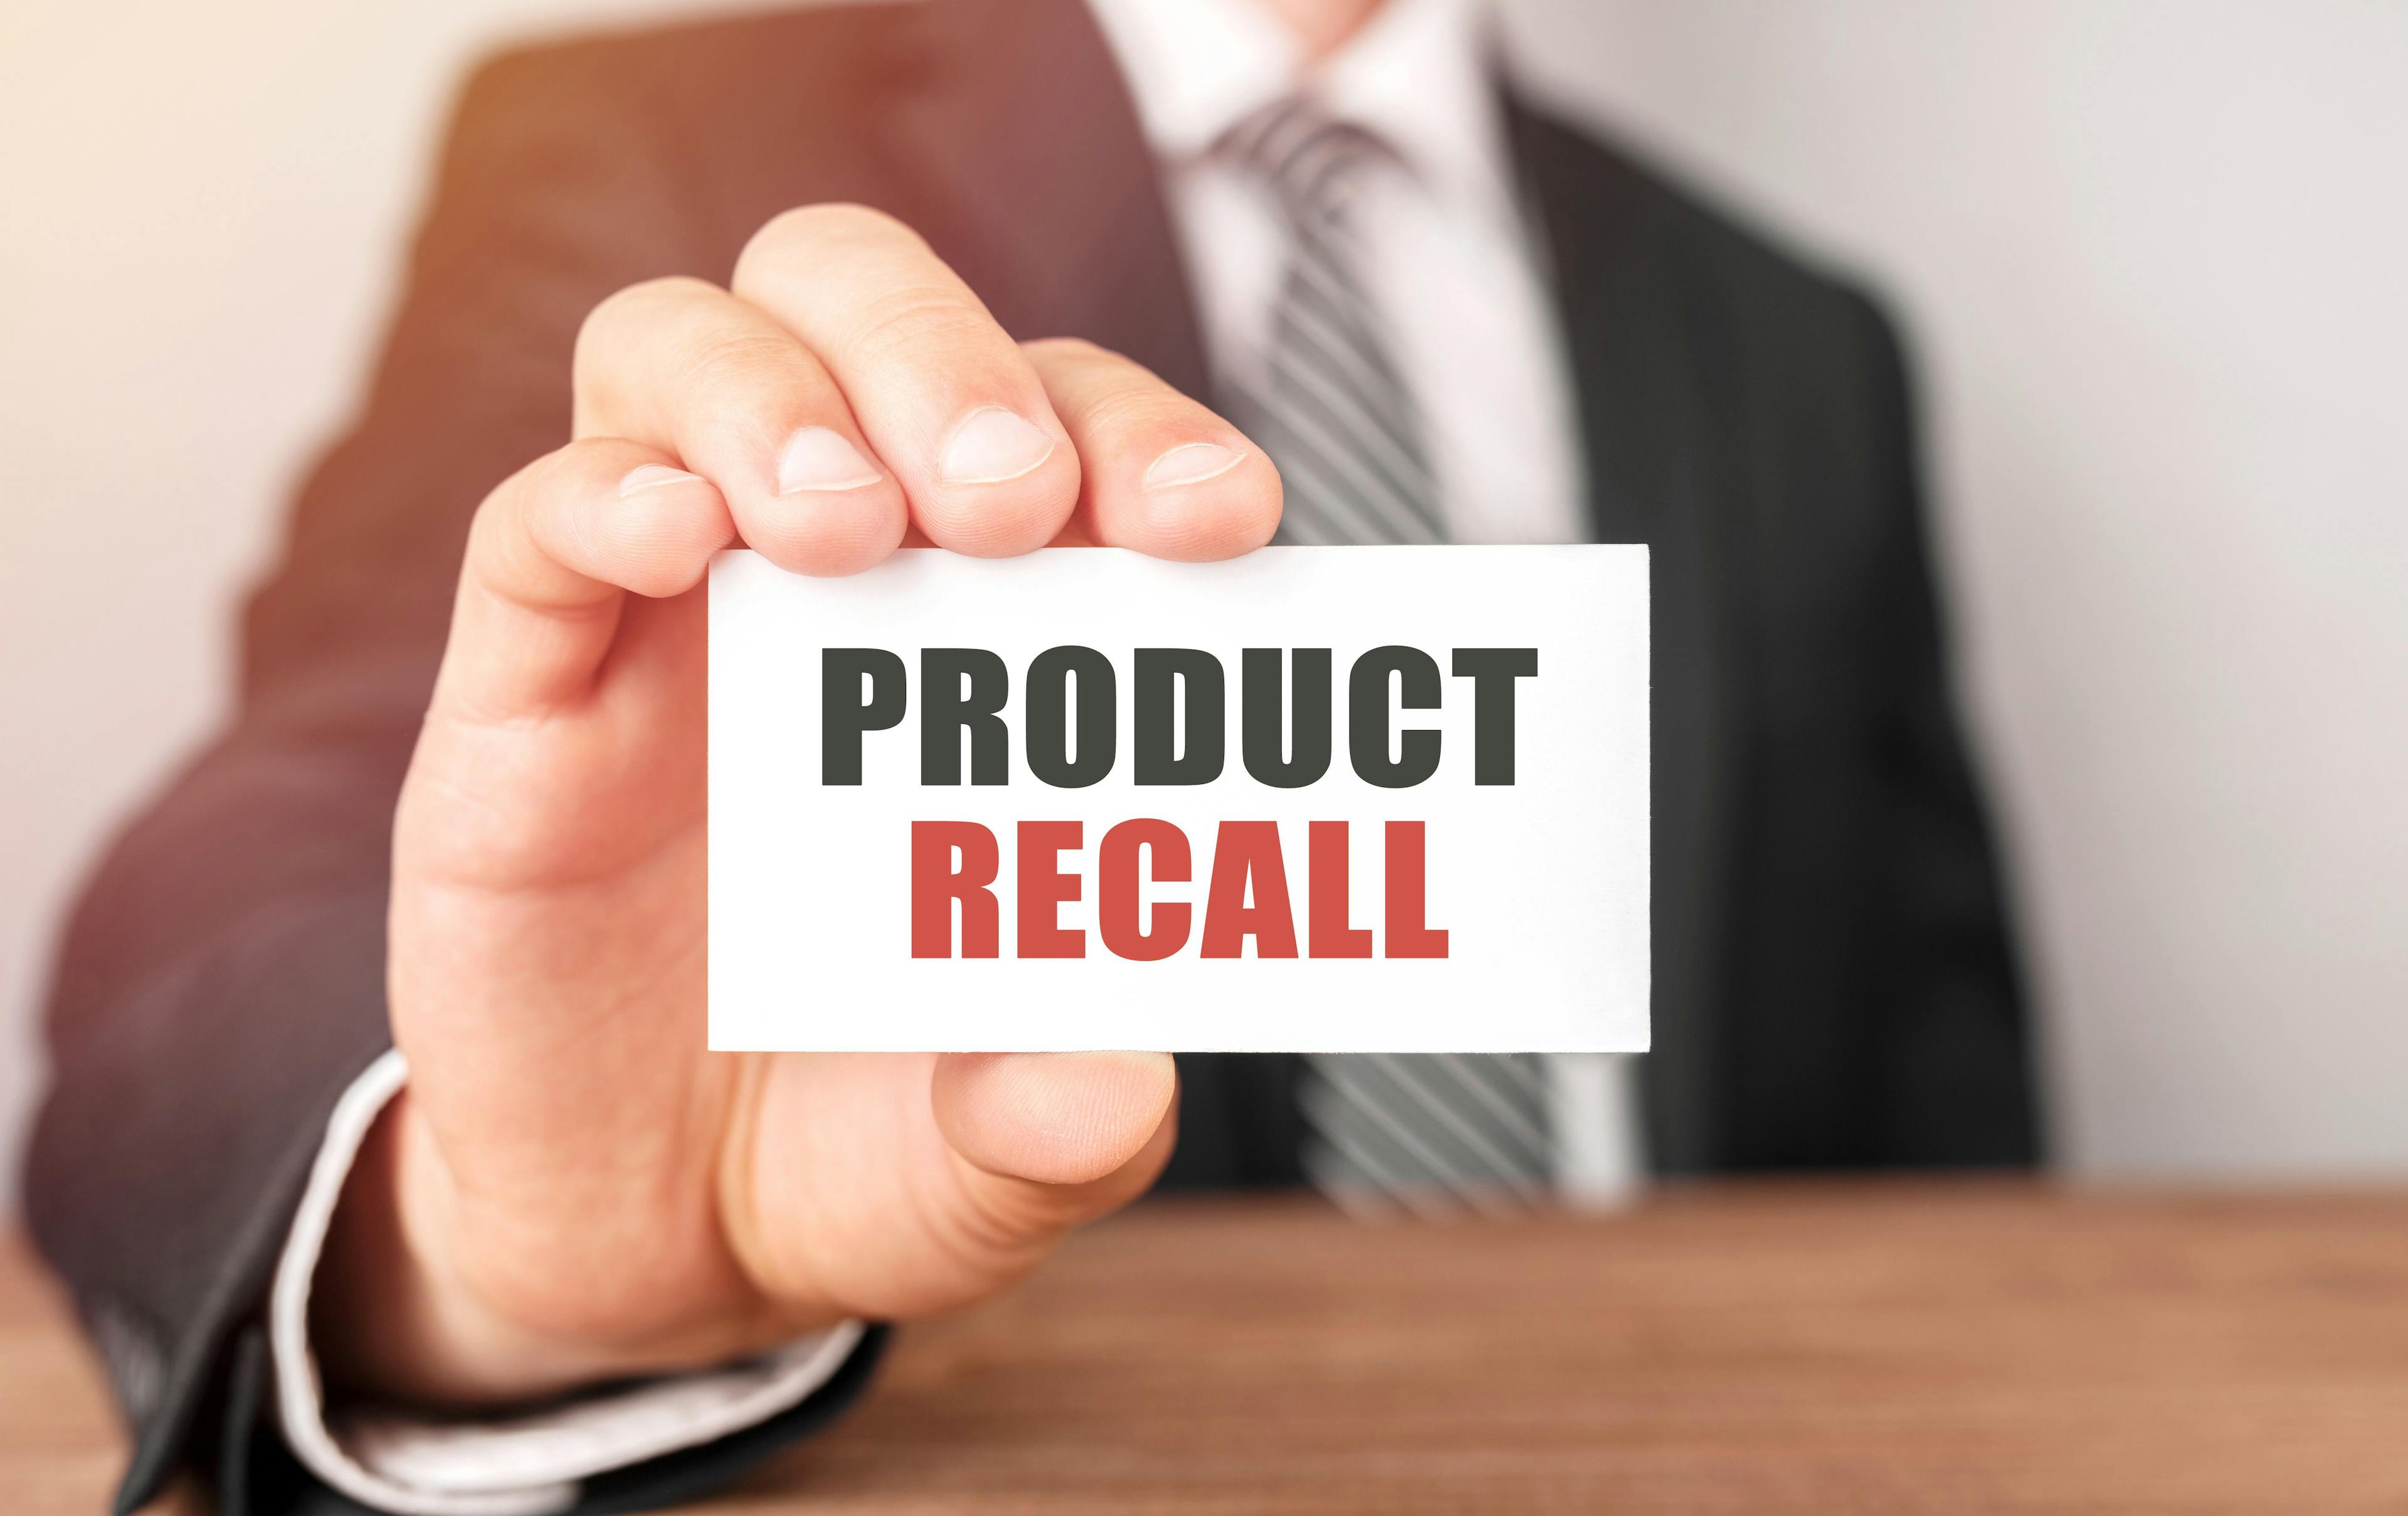 Product recall sign | Image Credit: © Michail Petrov - © Michail Petrov - stock.adobe.com.